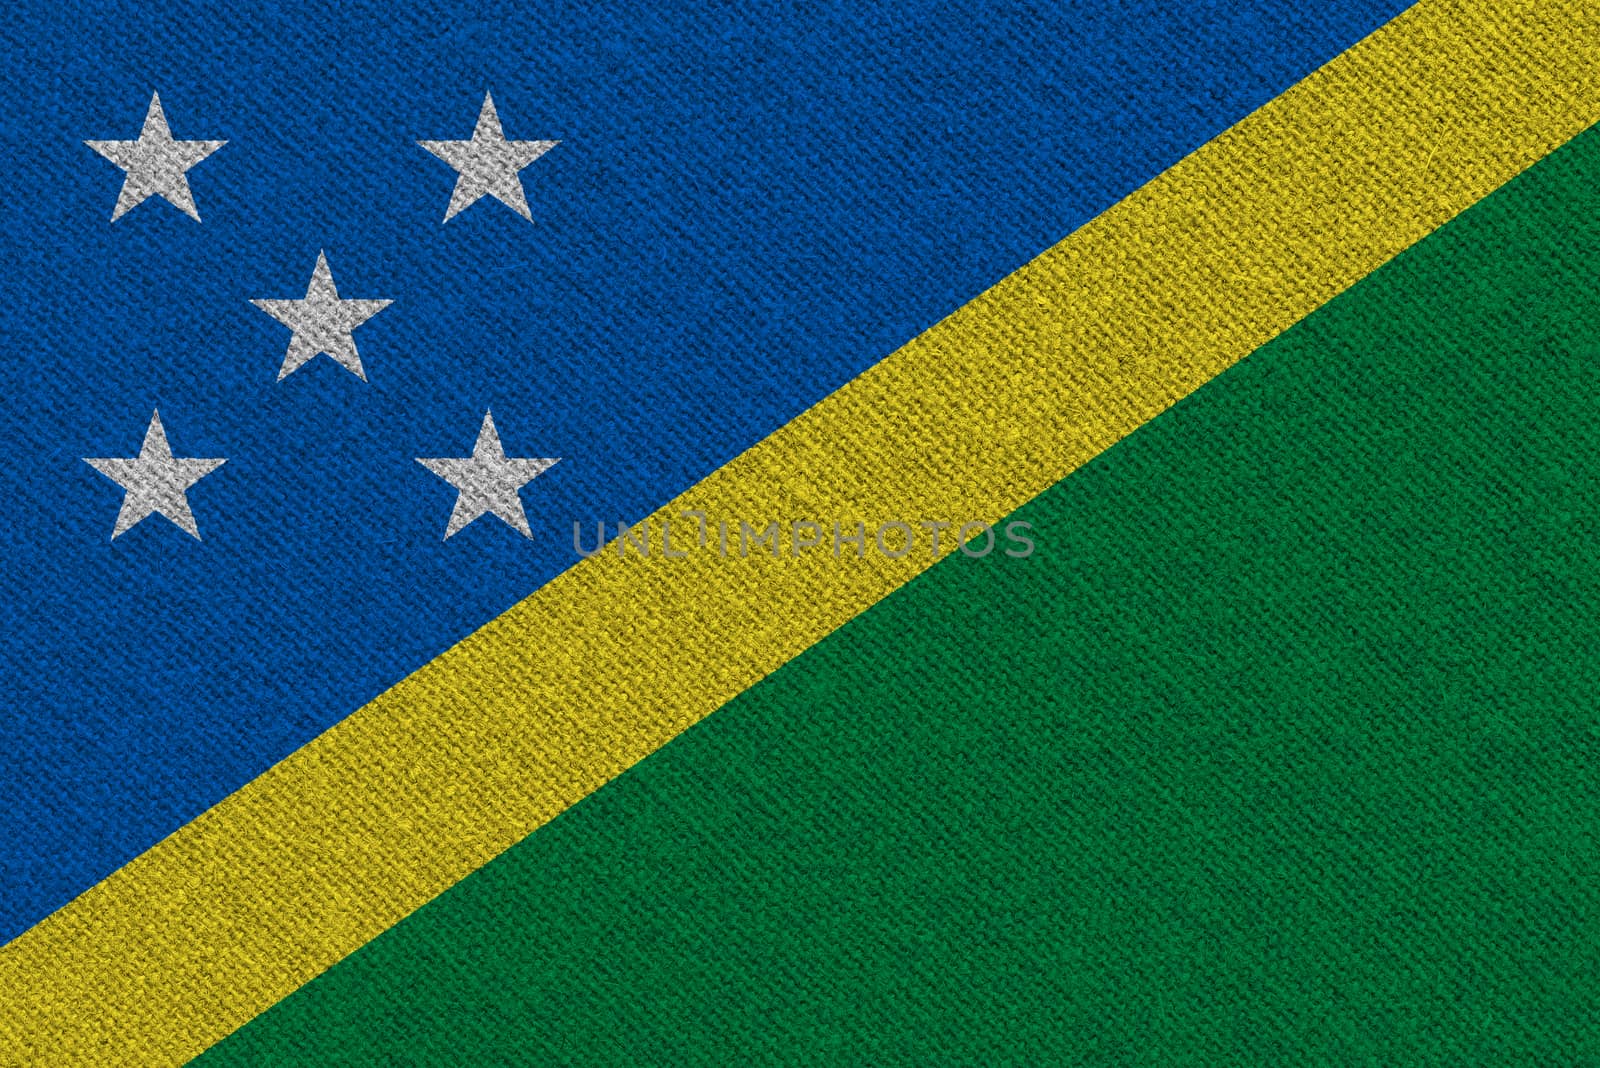 Solomon Islands fabric flag. Patriotic background. National flag of Solomon Islands